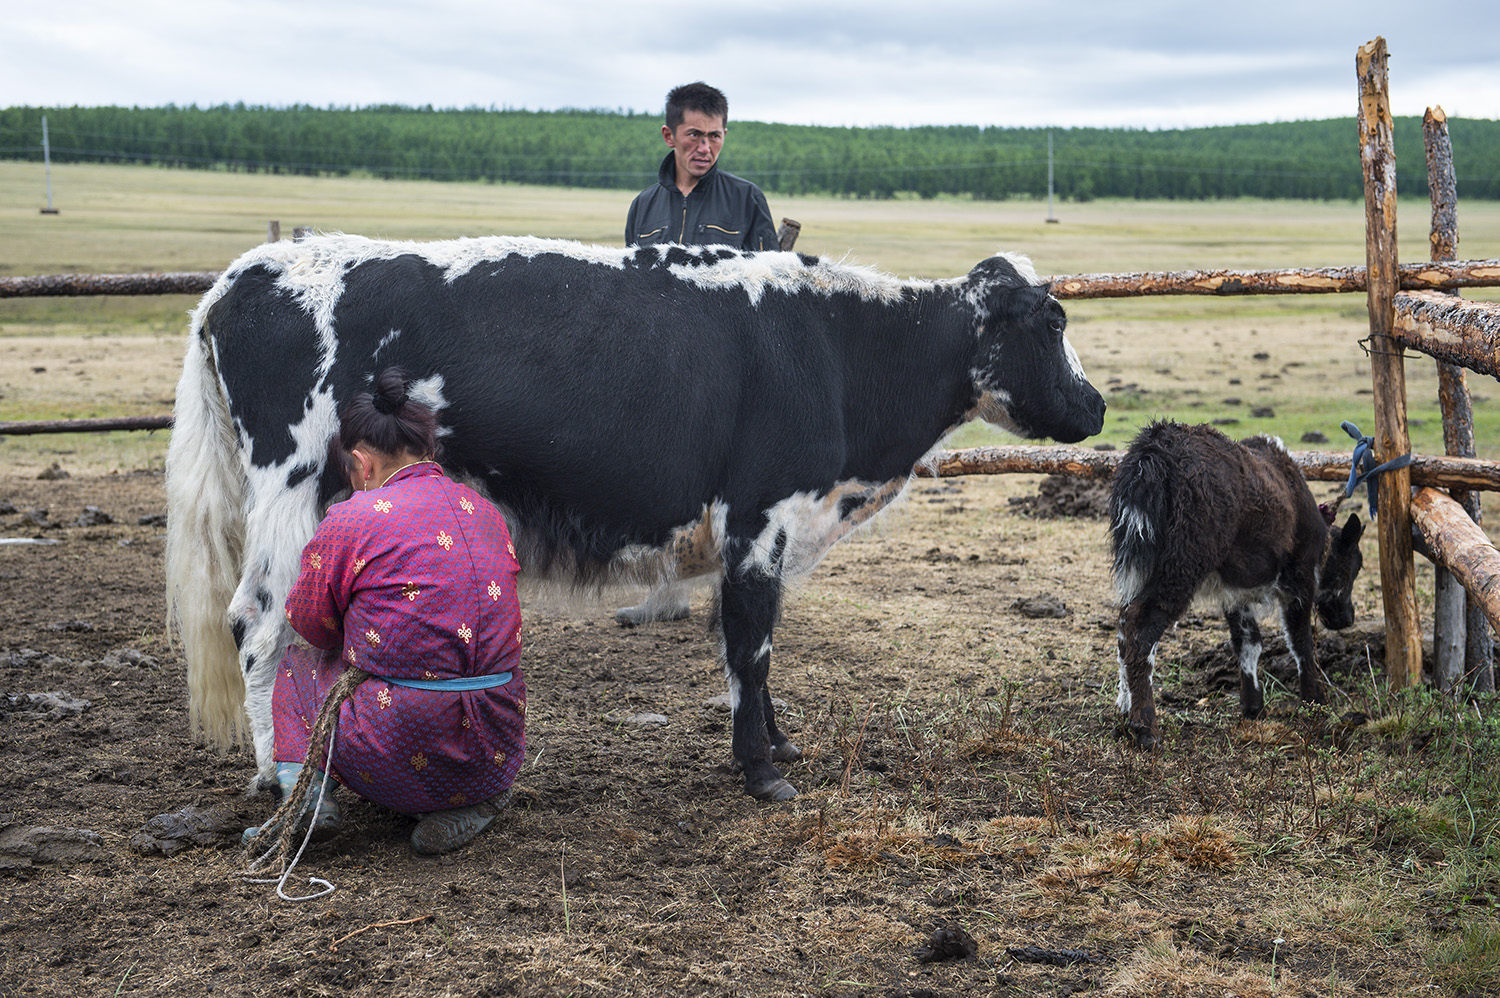 Mongolian milk production